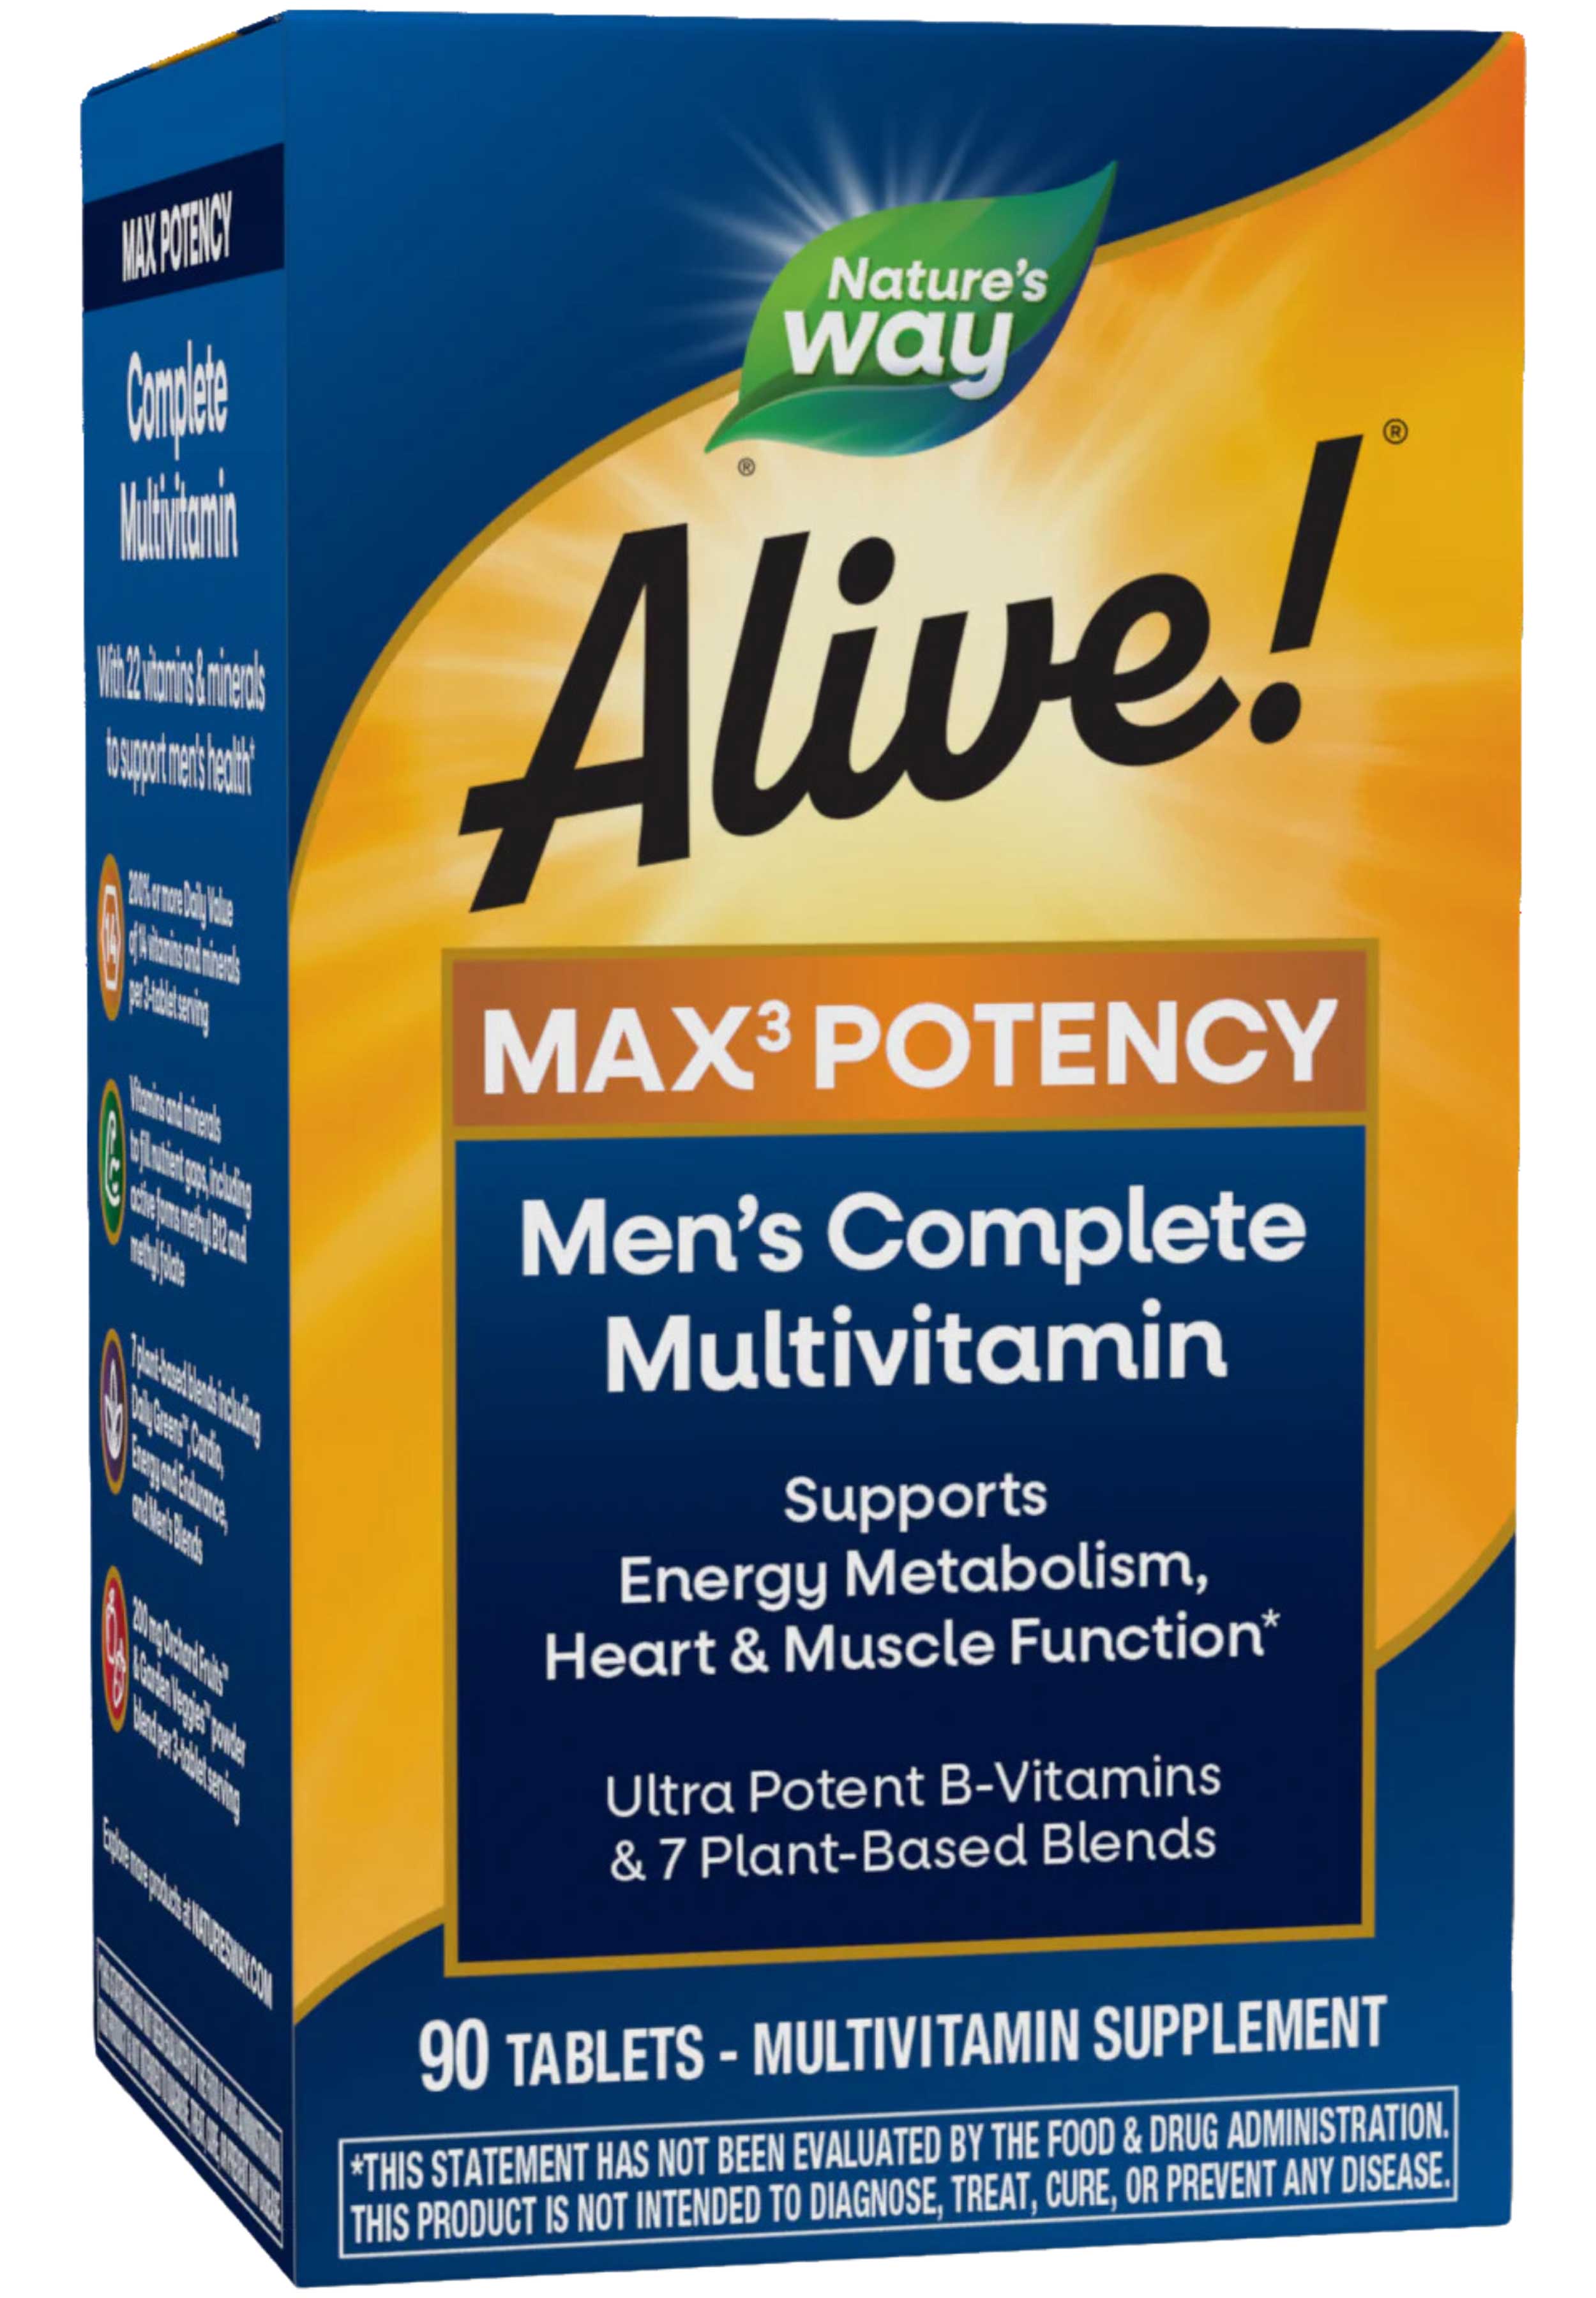 Nature's Way Alive! Max3 Potency Men's Multivitamin